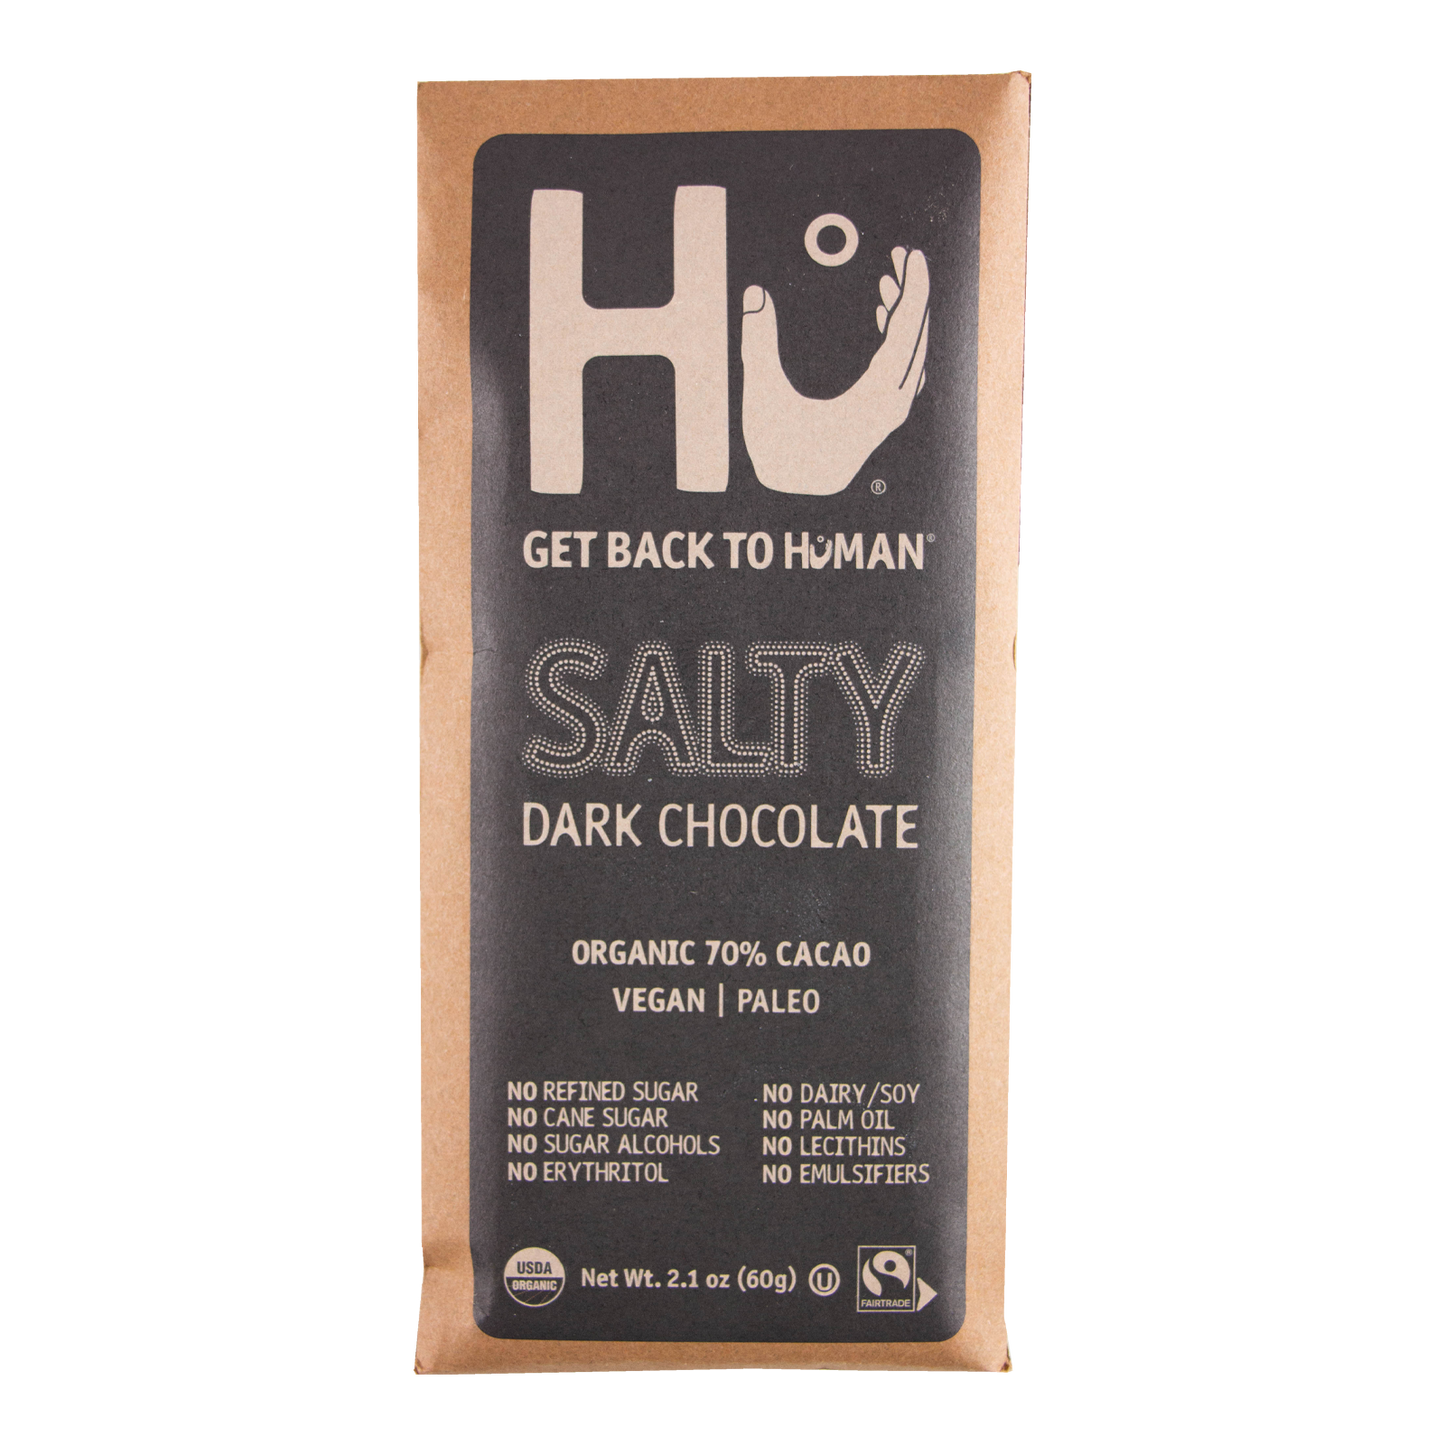 Hu - Salty Dark Chocolate